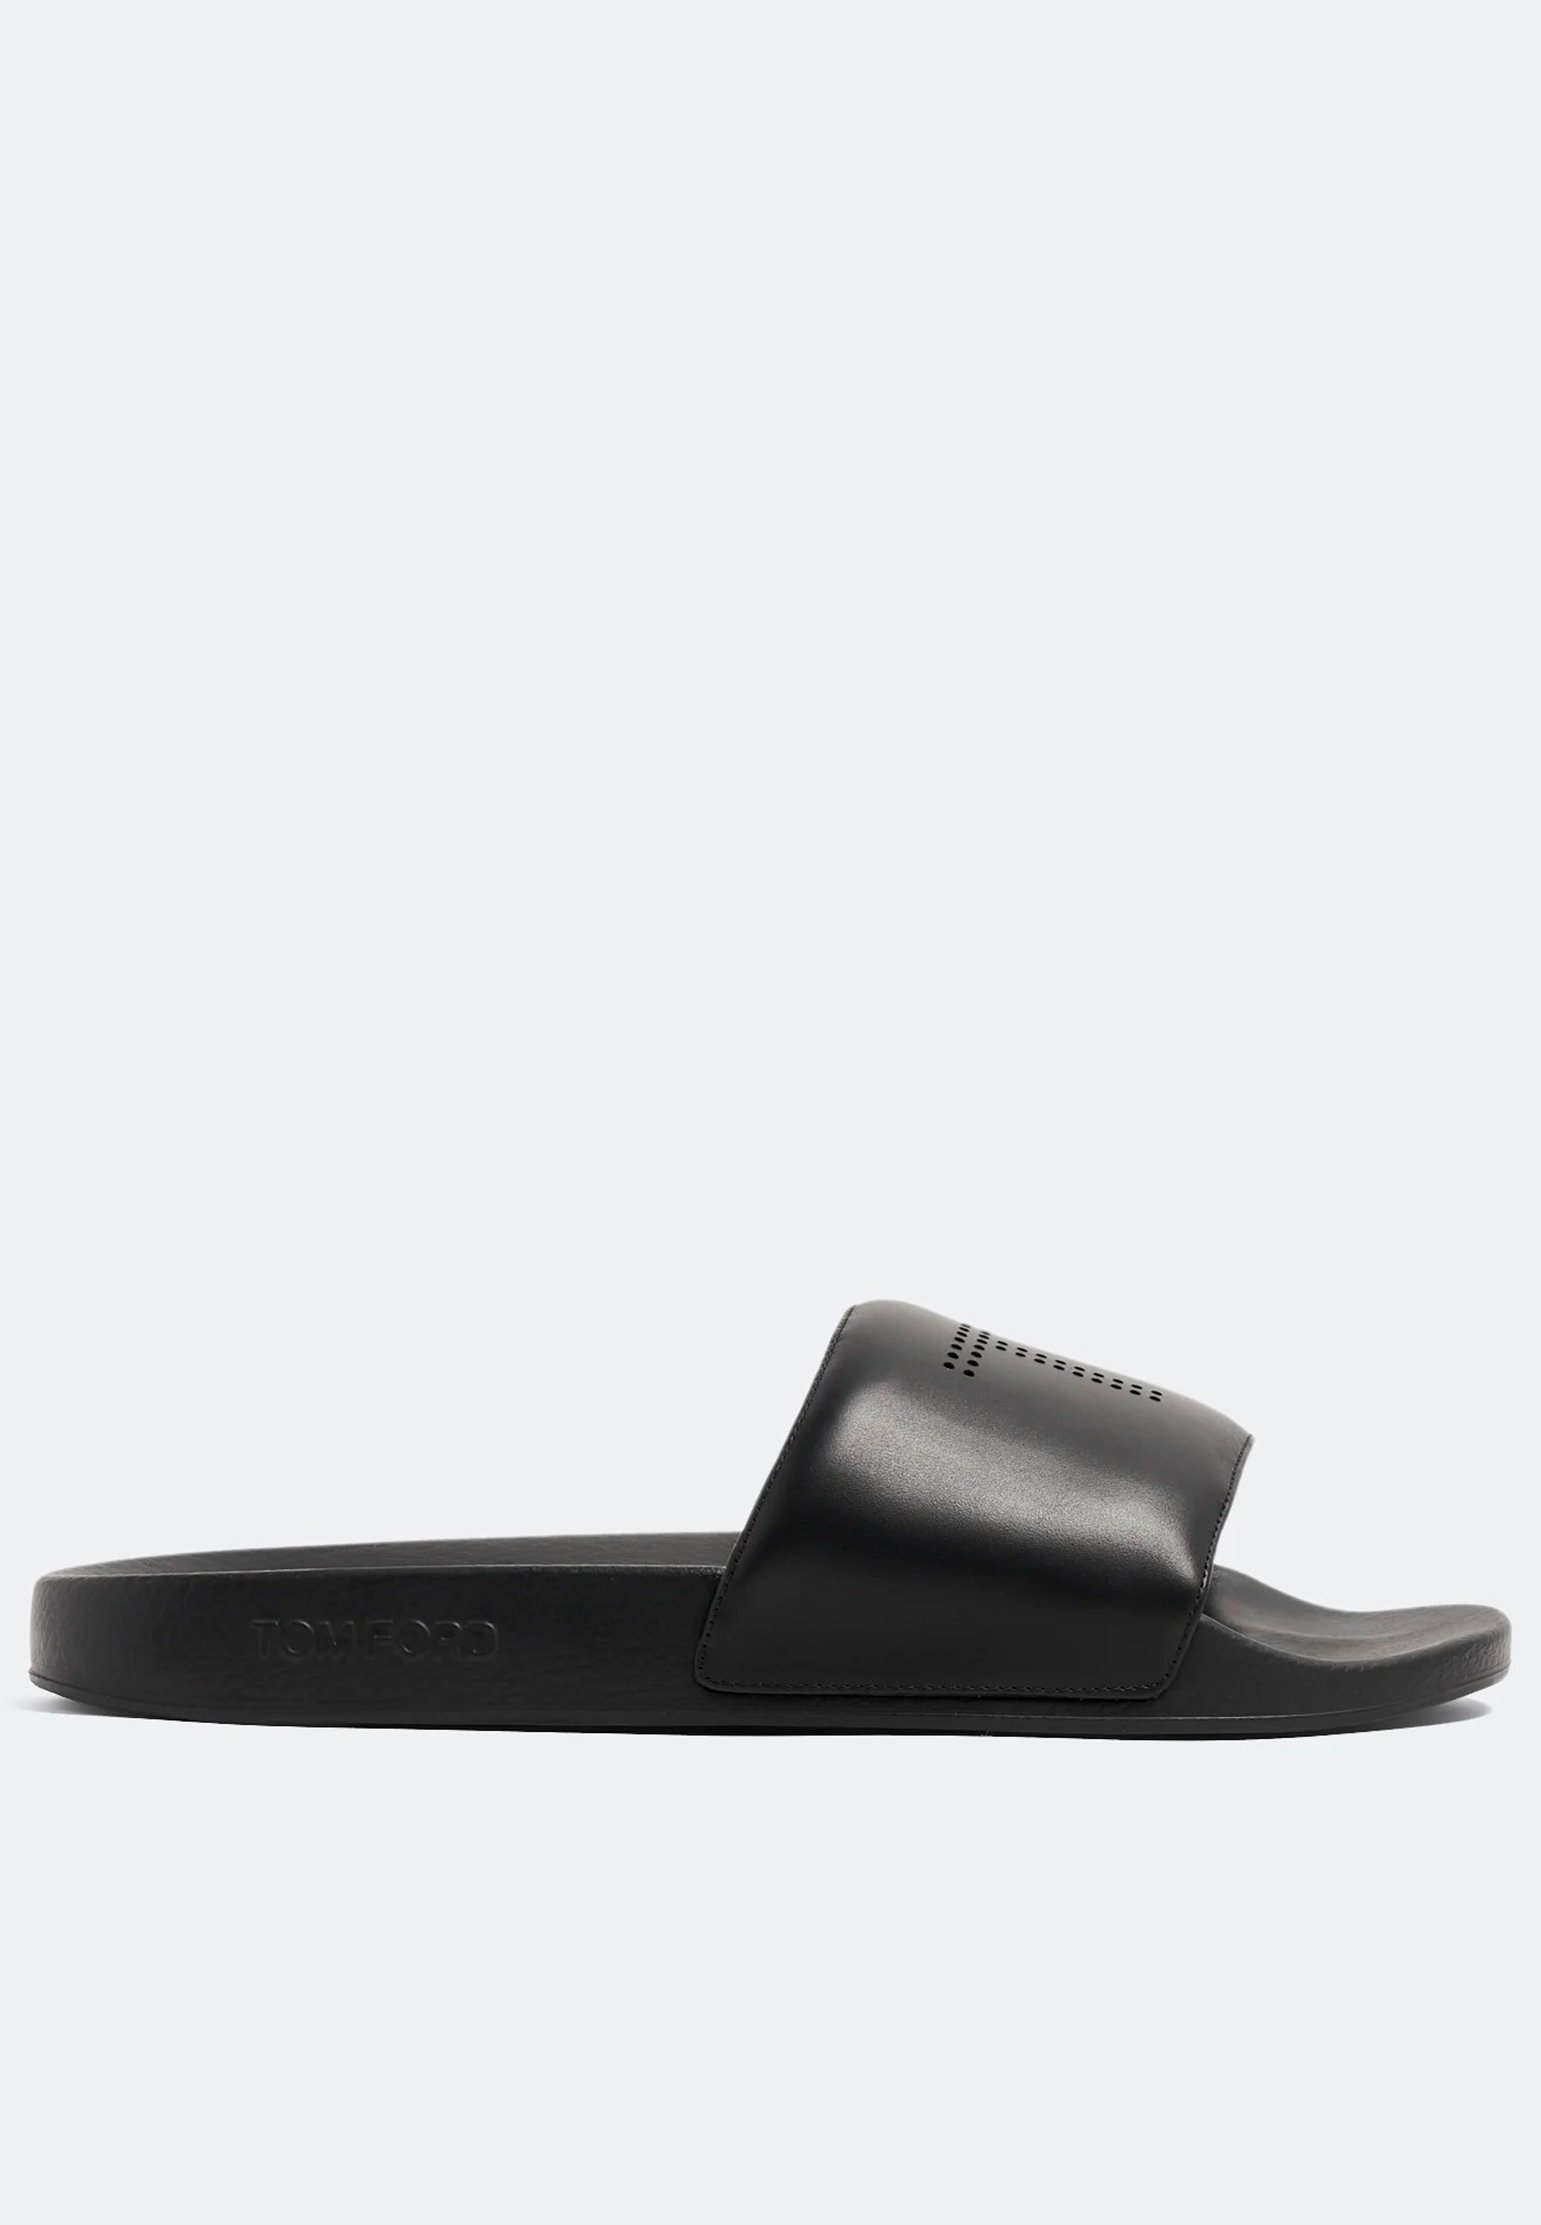 Sandals TOM FORD Color: black (Code: 3015) in online store Allure